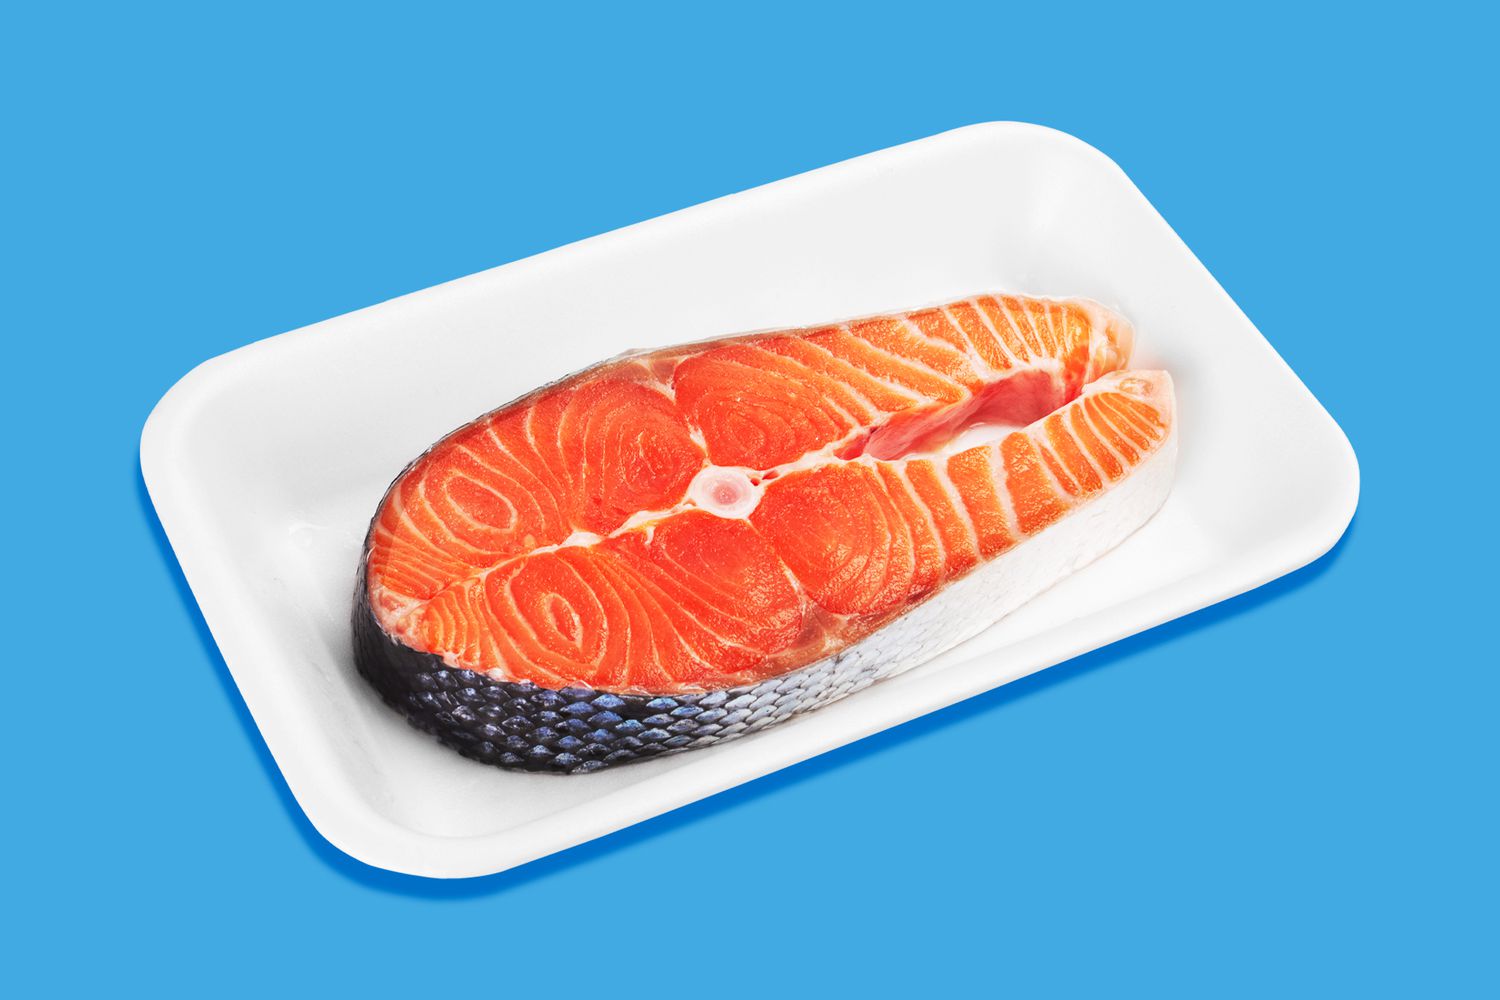 A salmon steak on a blue background